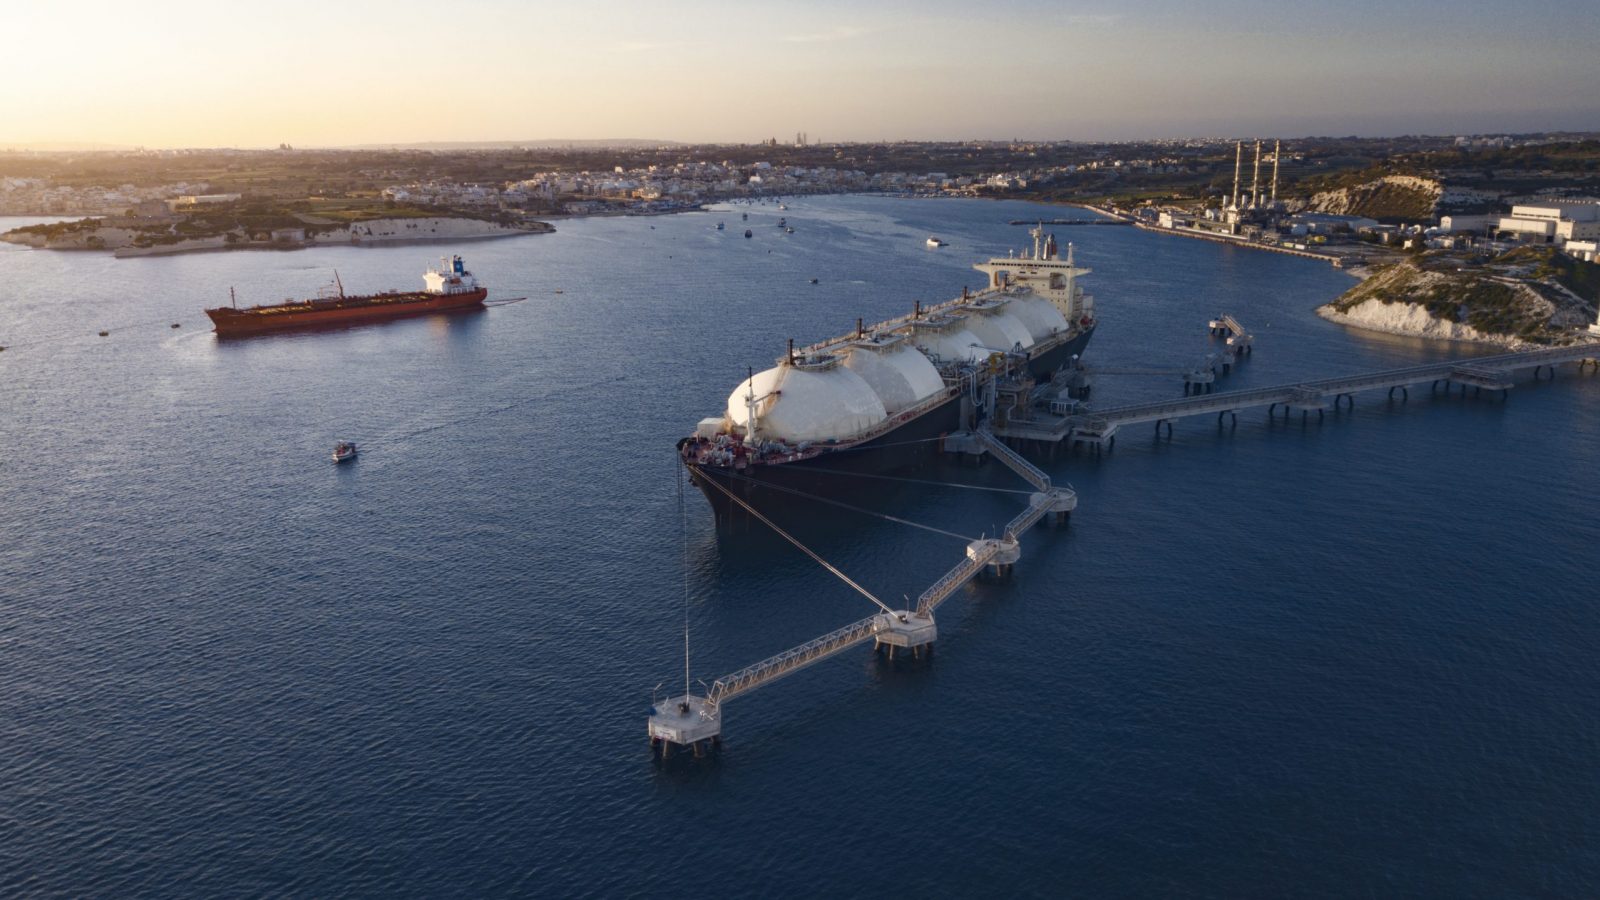 Australian Industrial Energy announces new partnership arrangement with Squadron Energy to accelerate Port Kembla Gas Terminal development